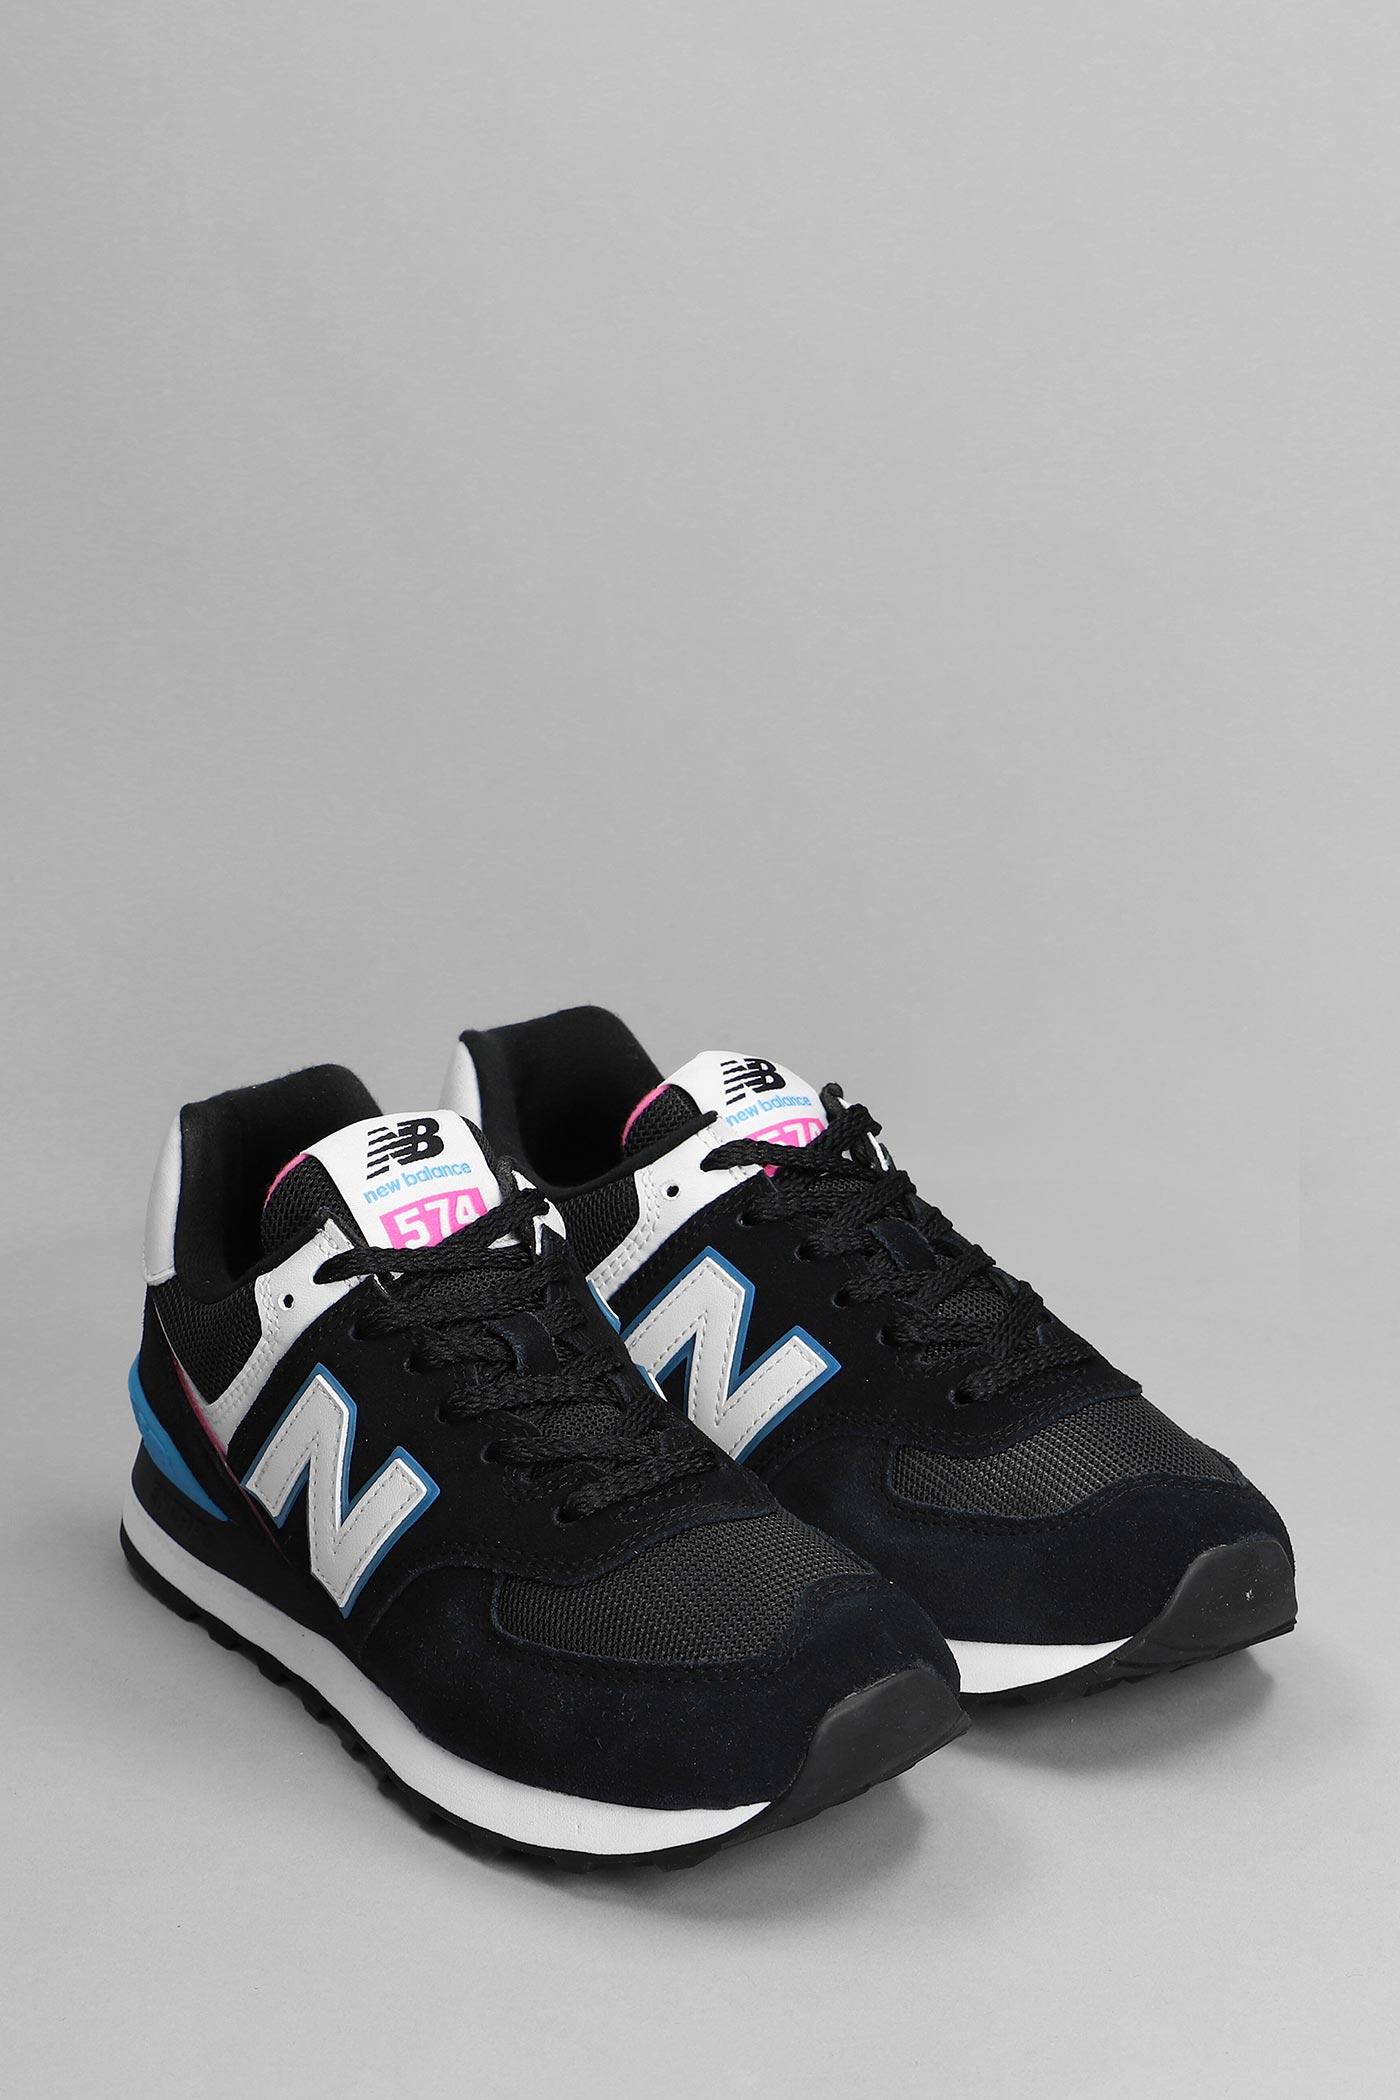 New Balance 574 Sneakers Grey and Pink - munimoro.gob.pe